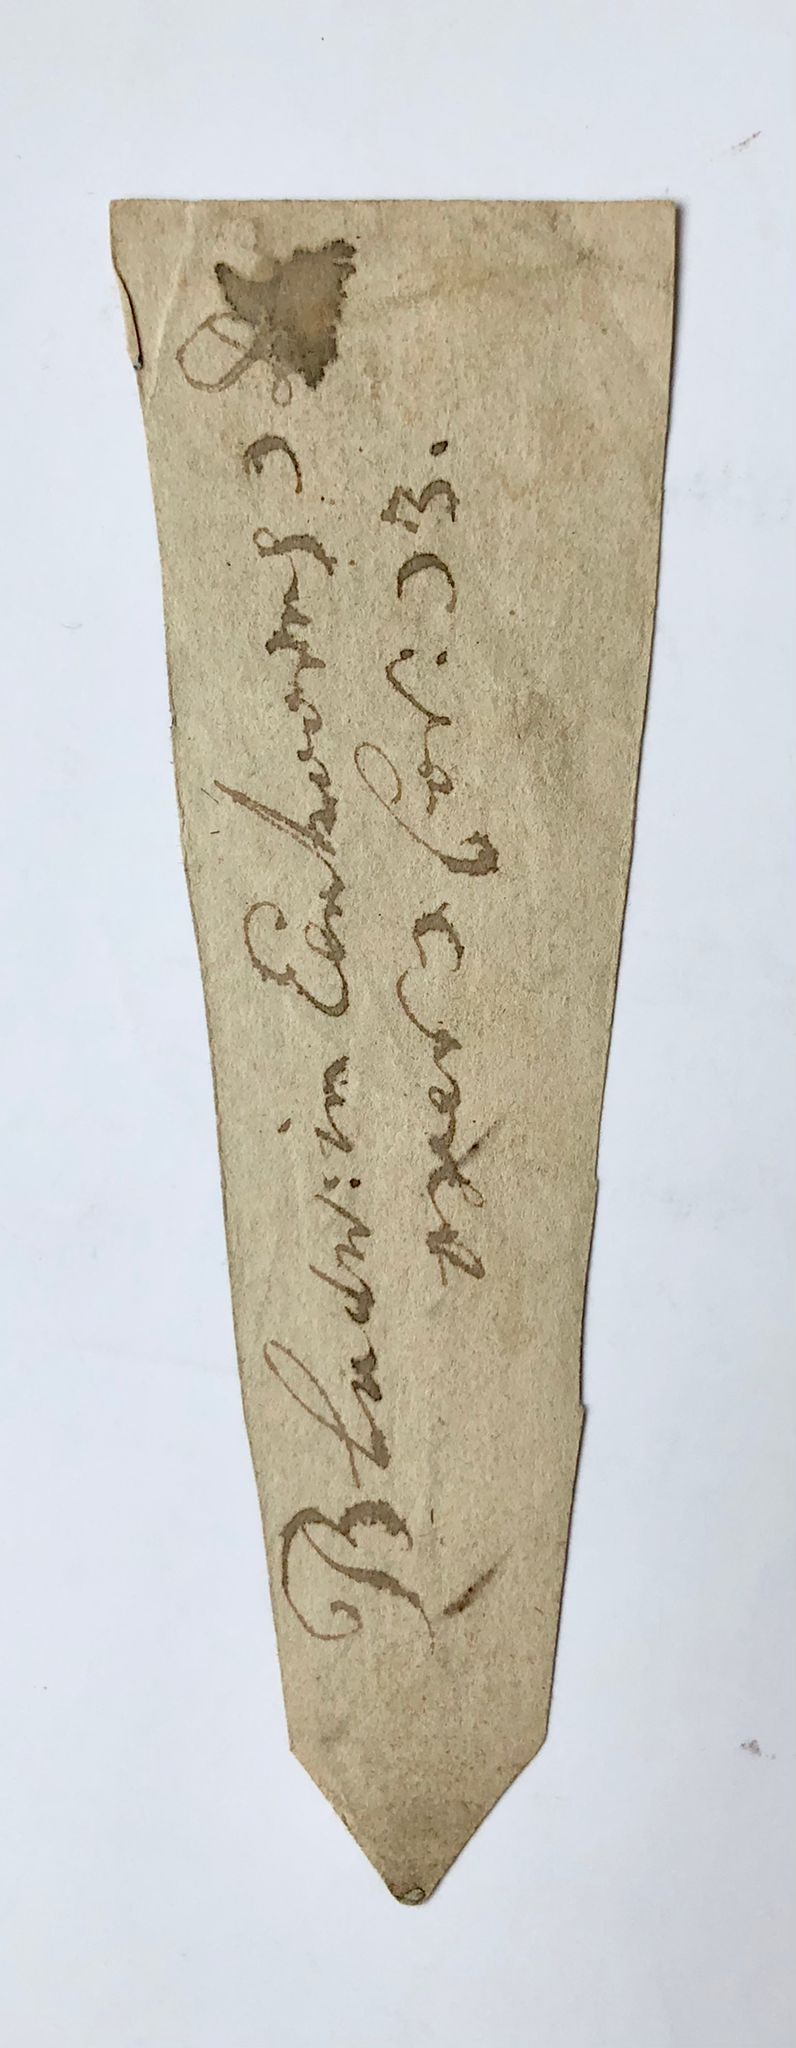 [Printed and partly manuscript, label for medicine, ca 1850] Label for medicine bottle, Printed by V. Hulleman, Blokzijl. In handwriting: 'voor Herman de Liefde', 1850. With engraving of deer (hert).